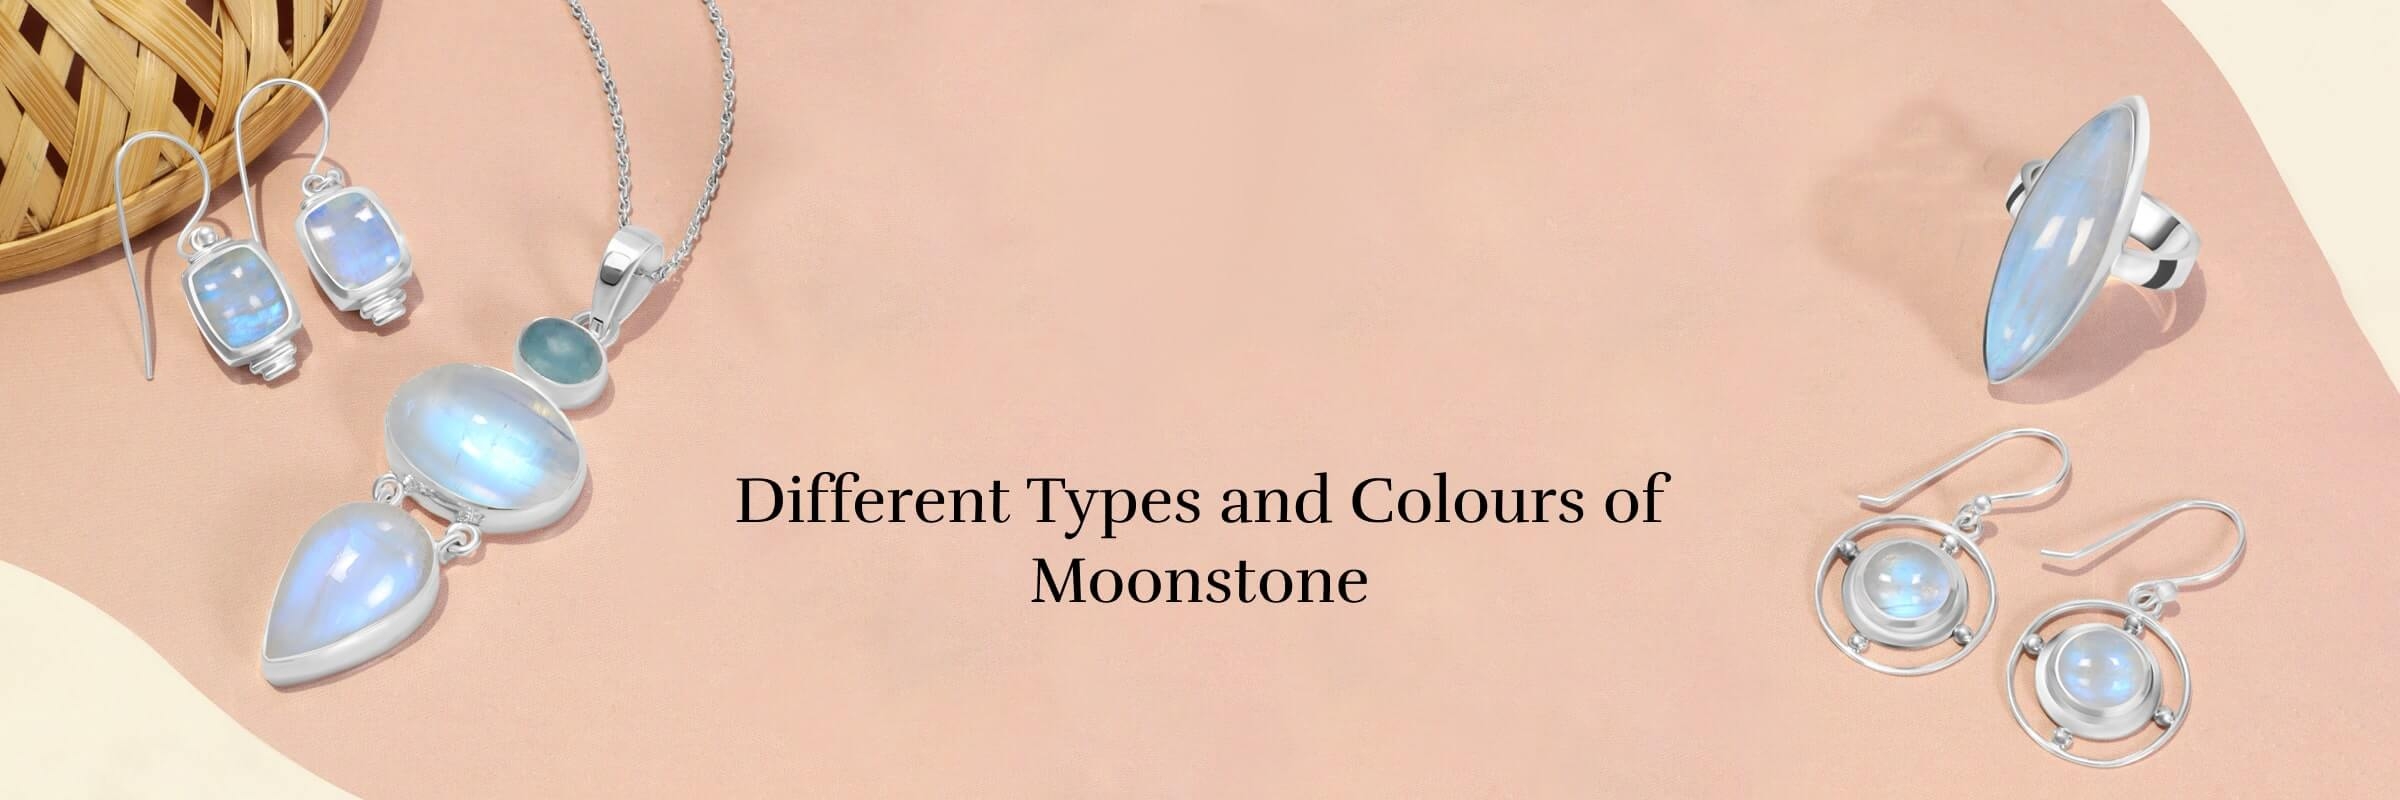 Types of moonstone